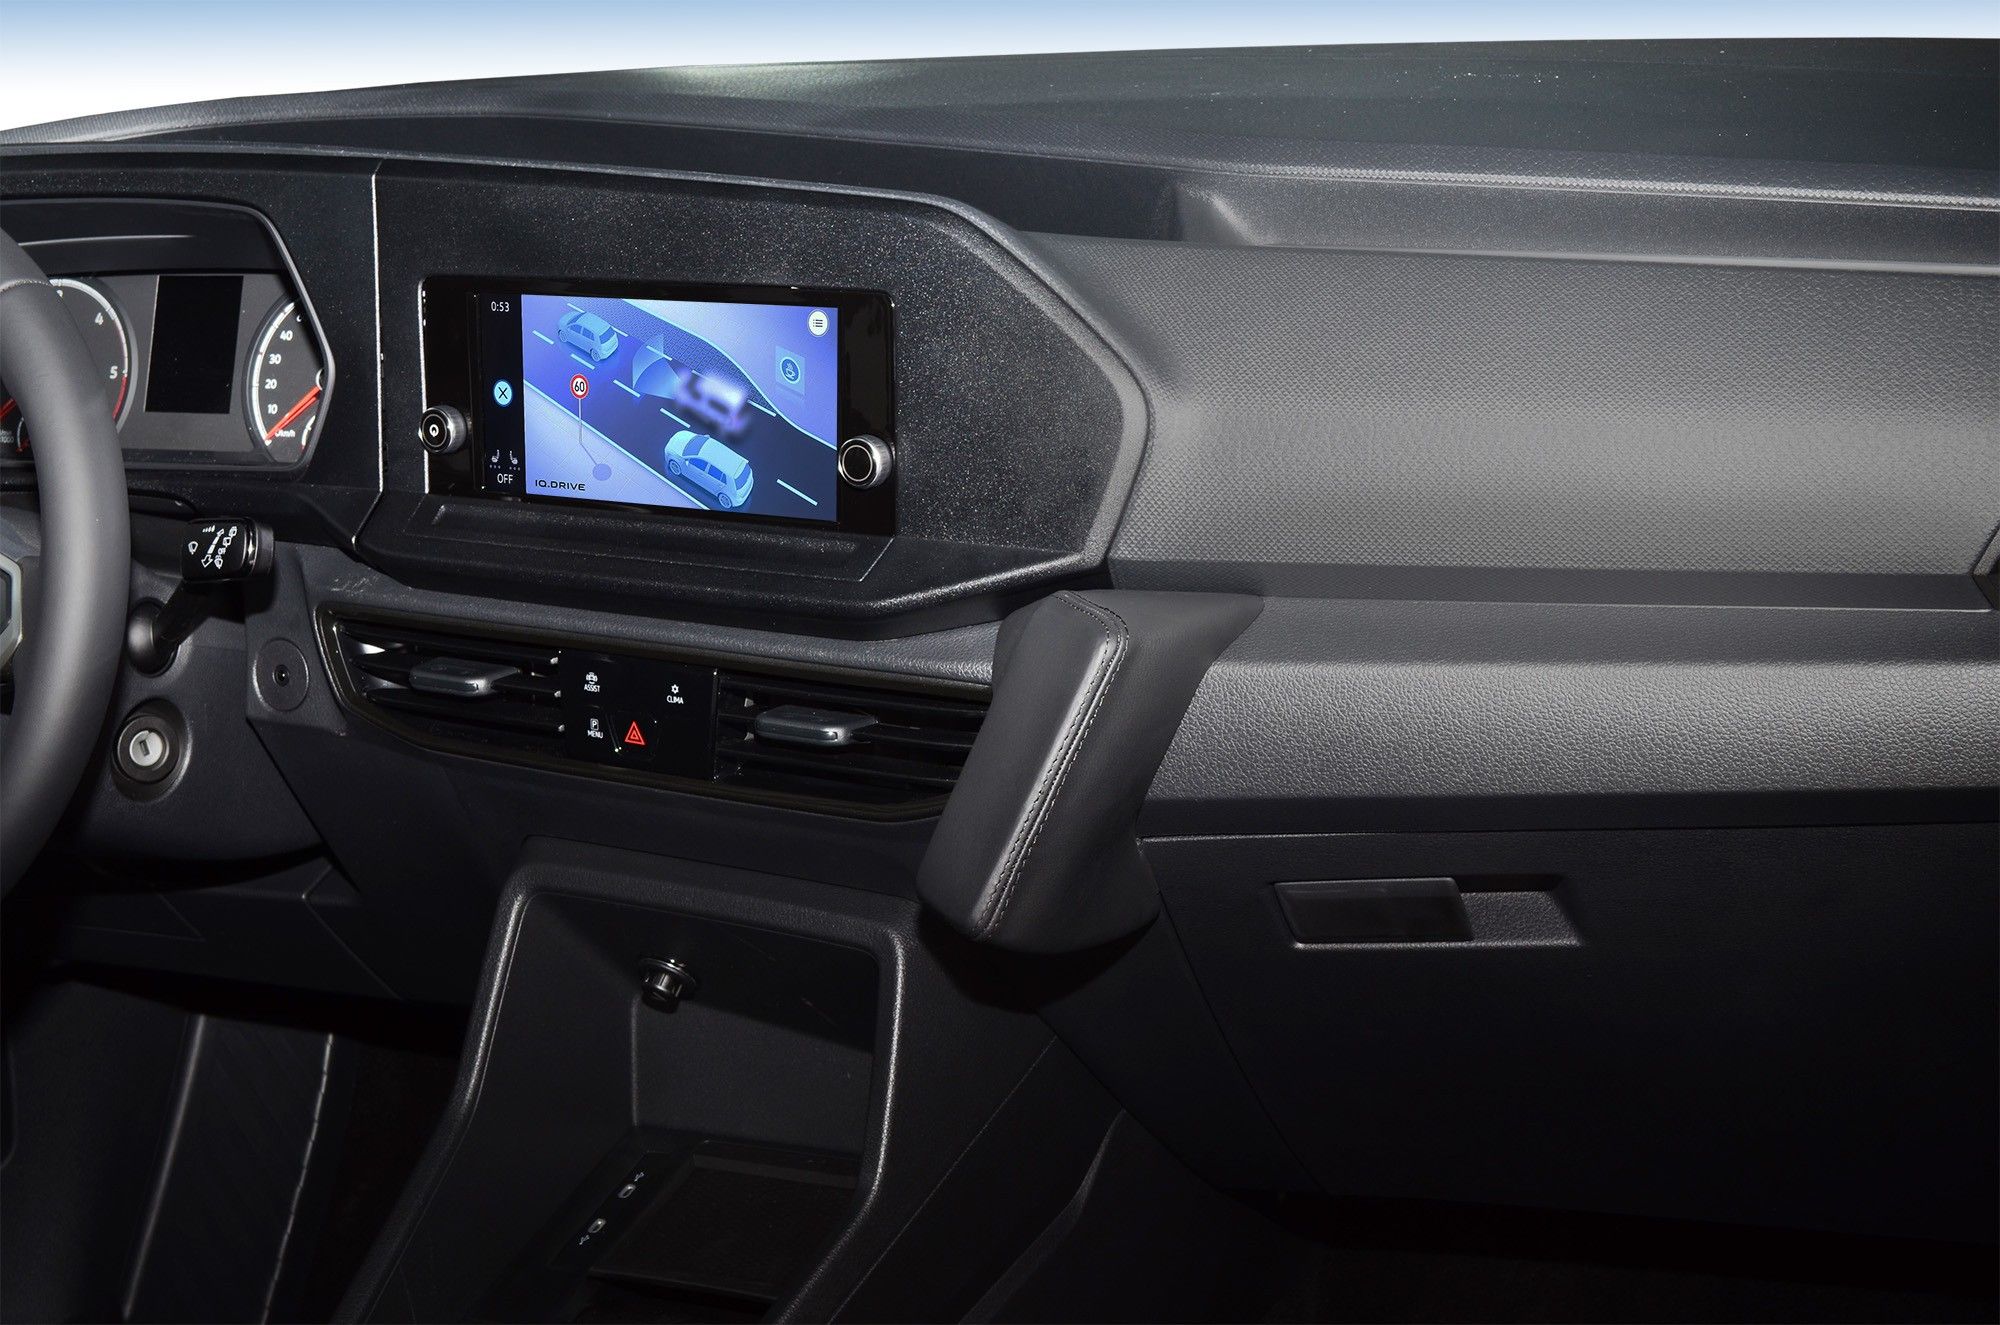 Kuda console Volkswagen Caddy 2020-